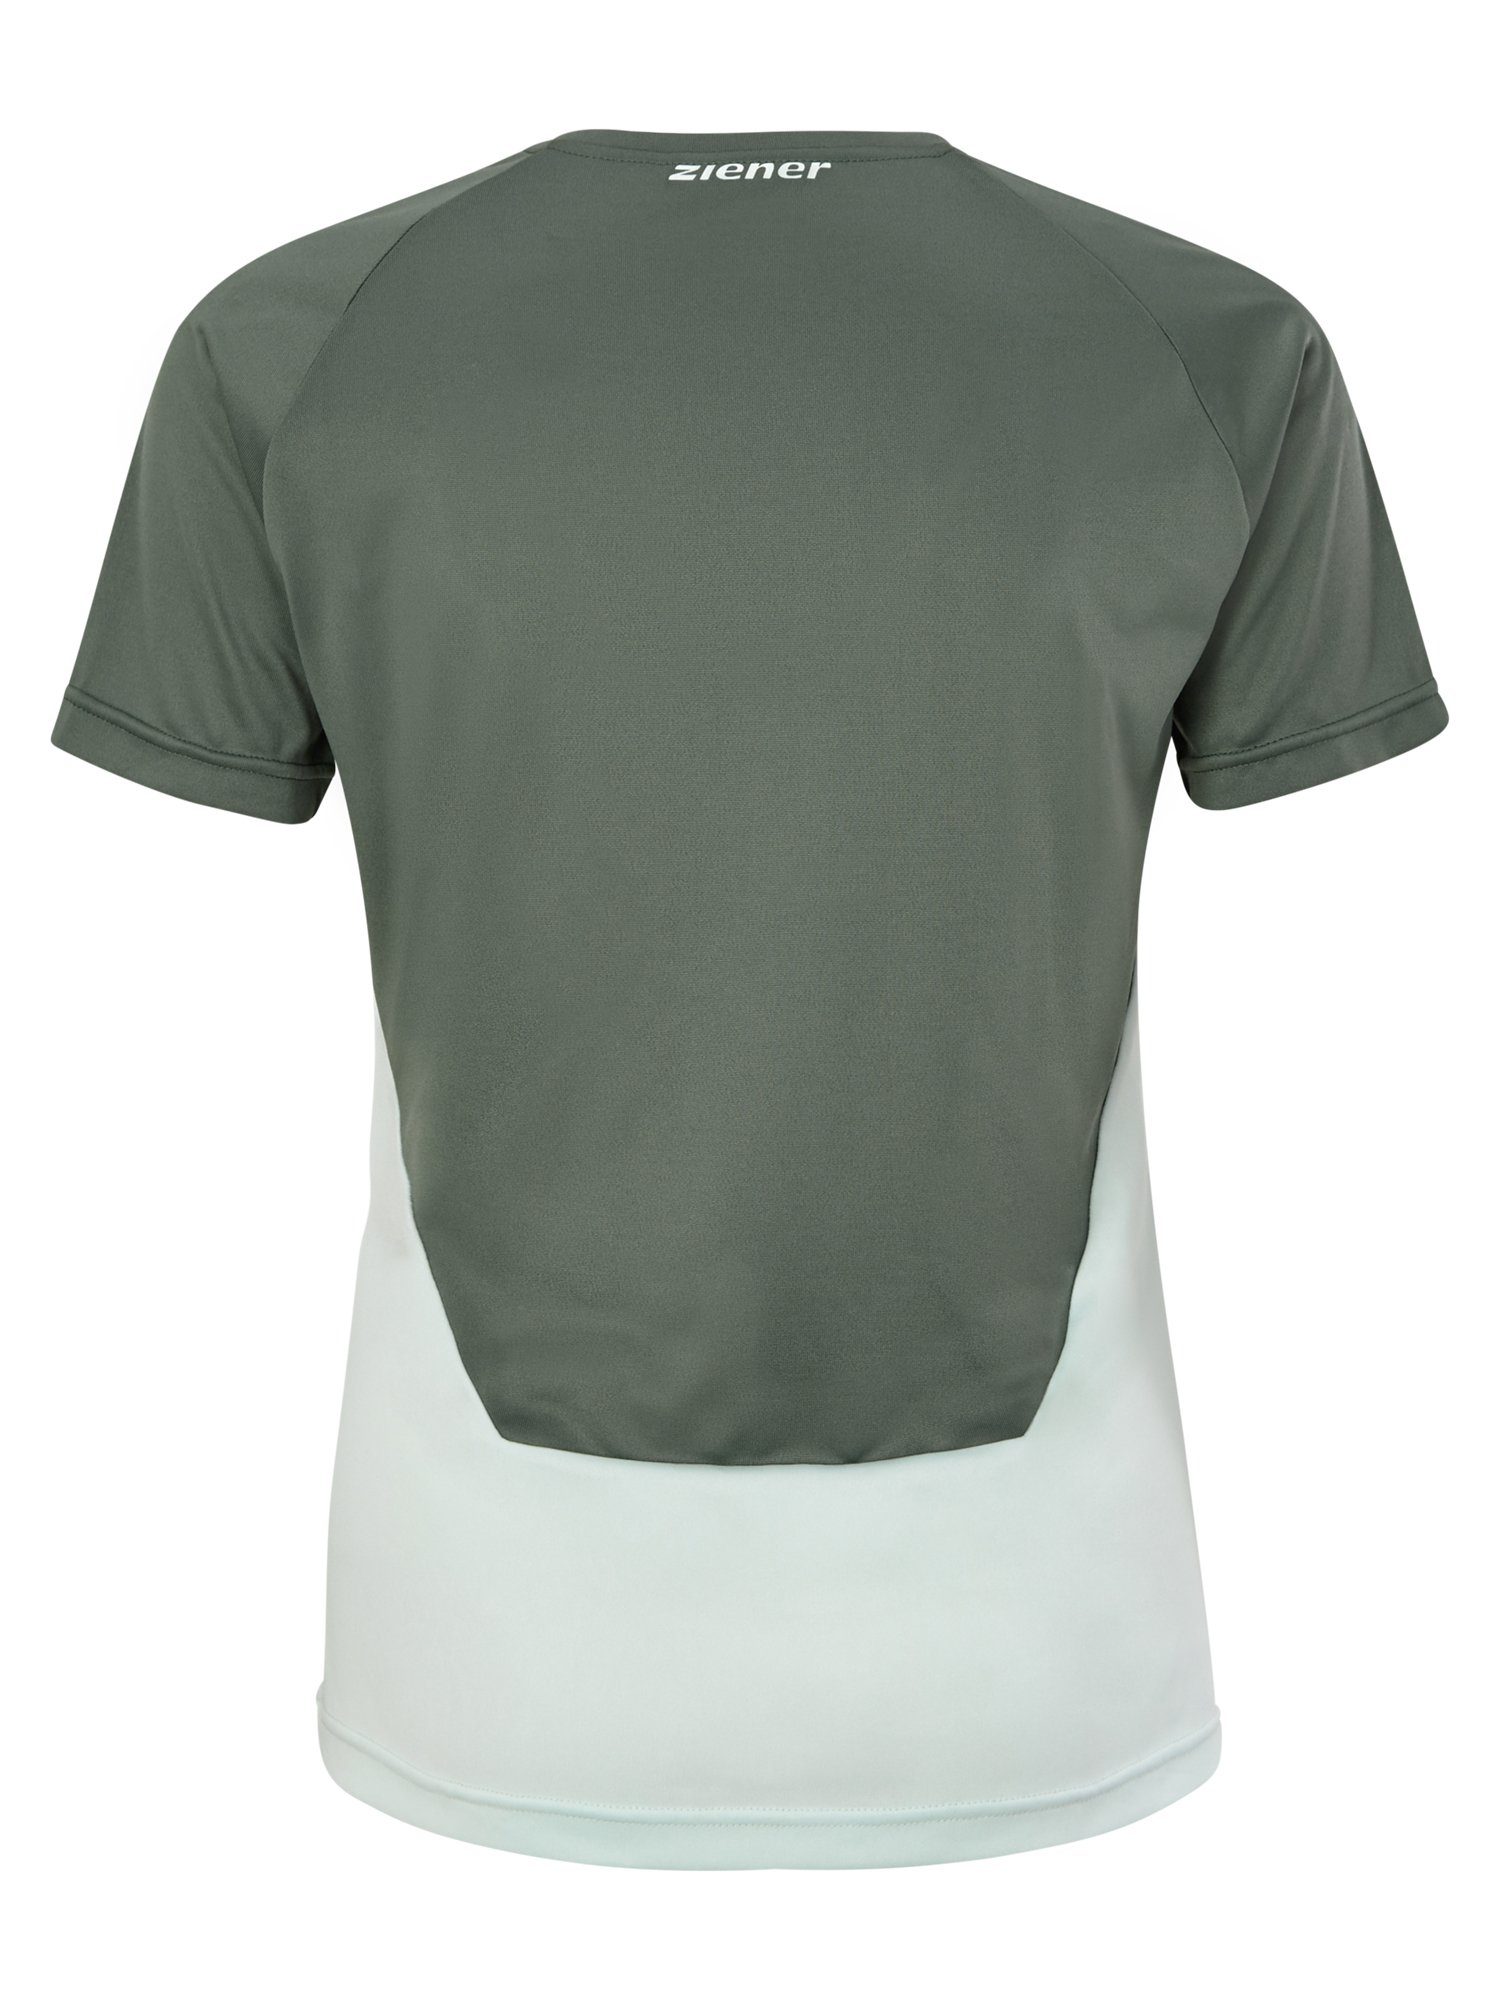 NABUCA Ziener T-Shirt olivgrün